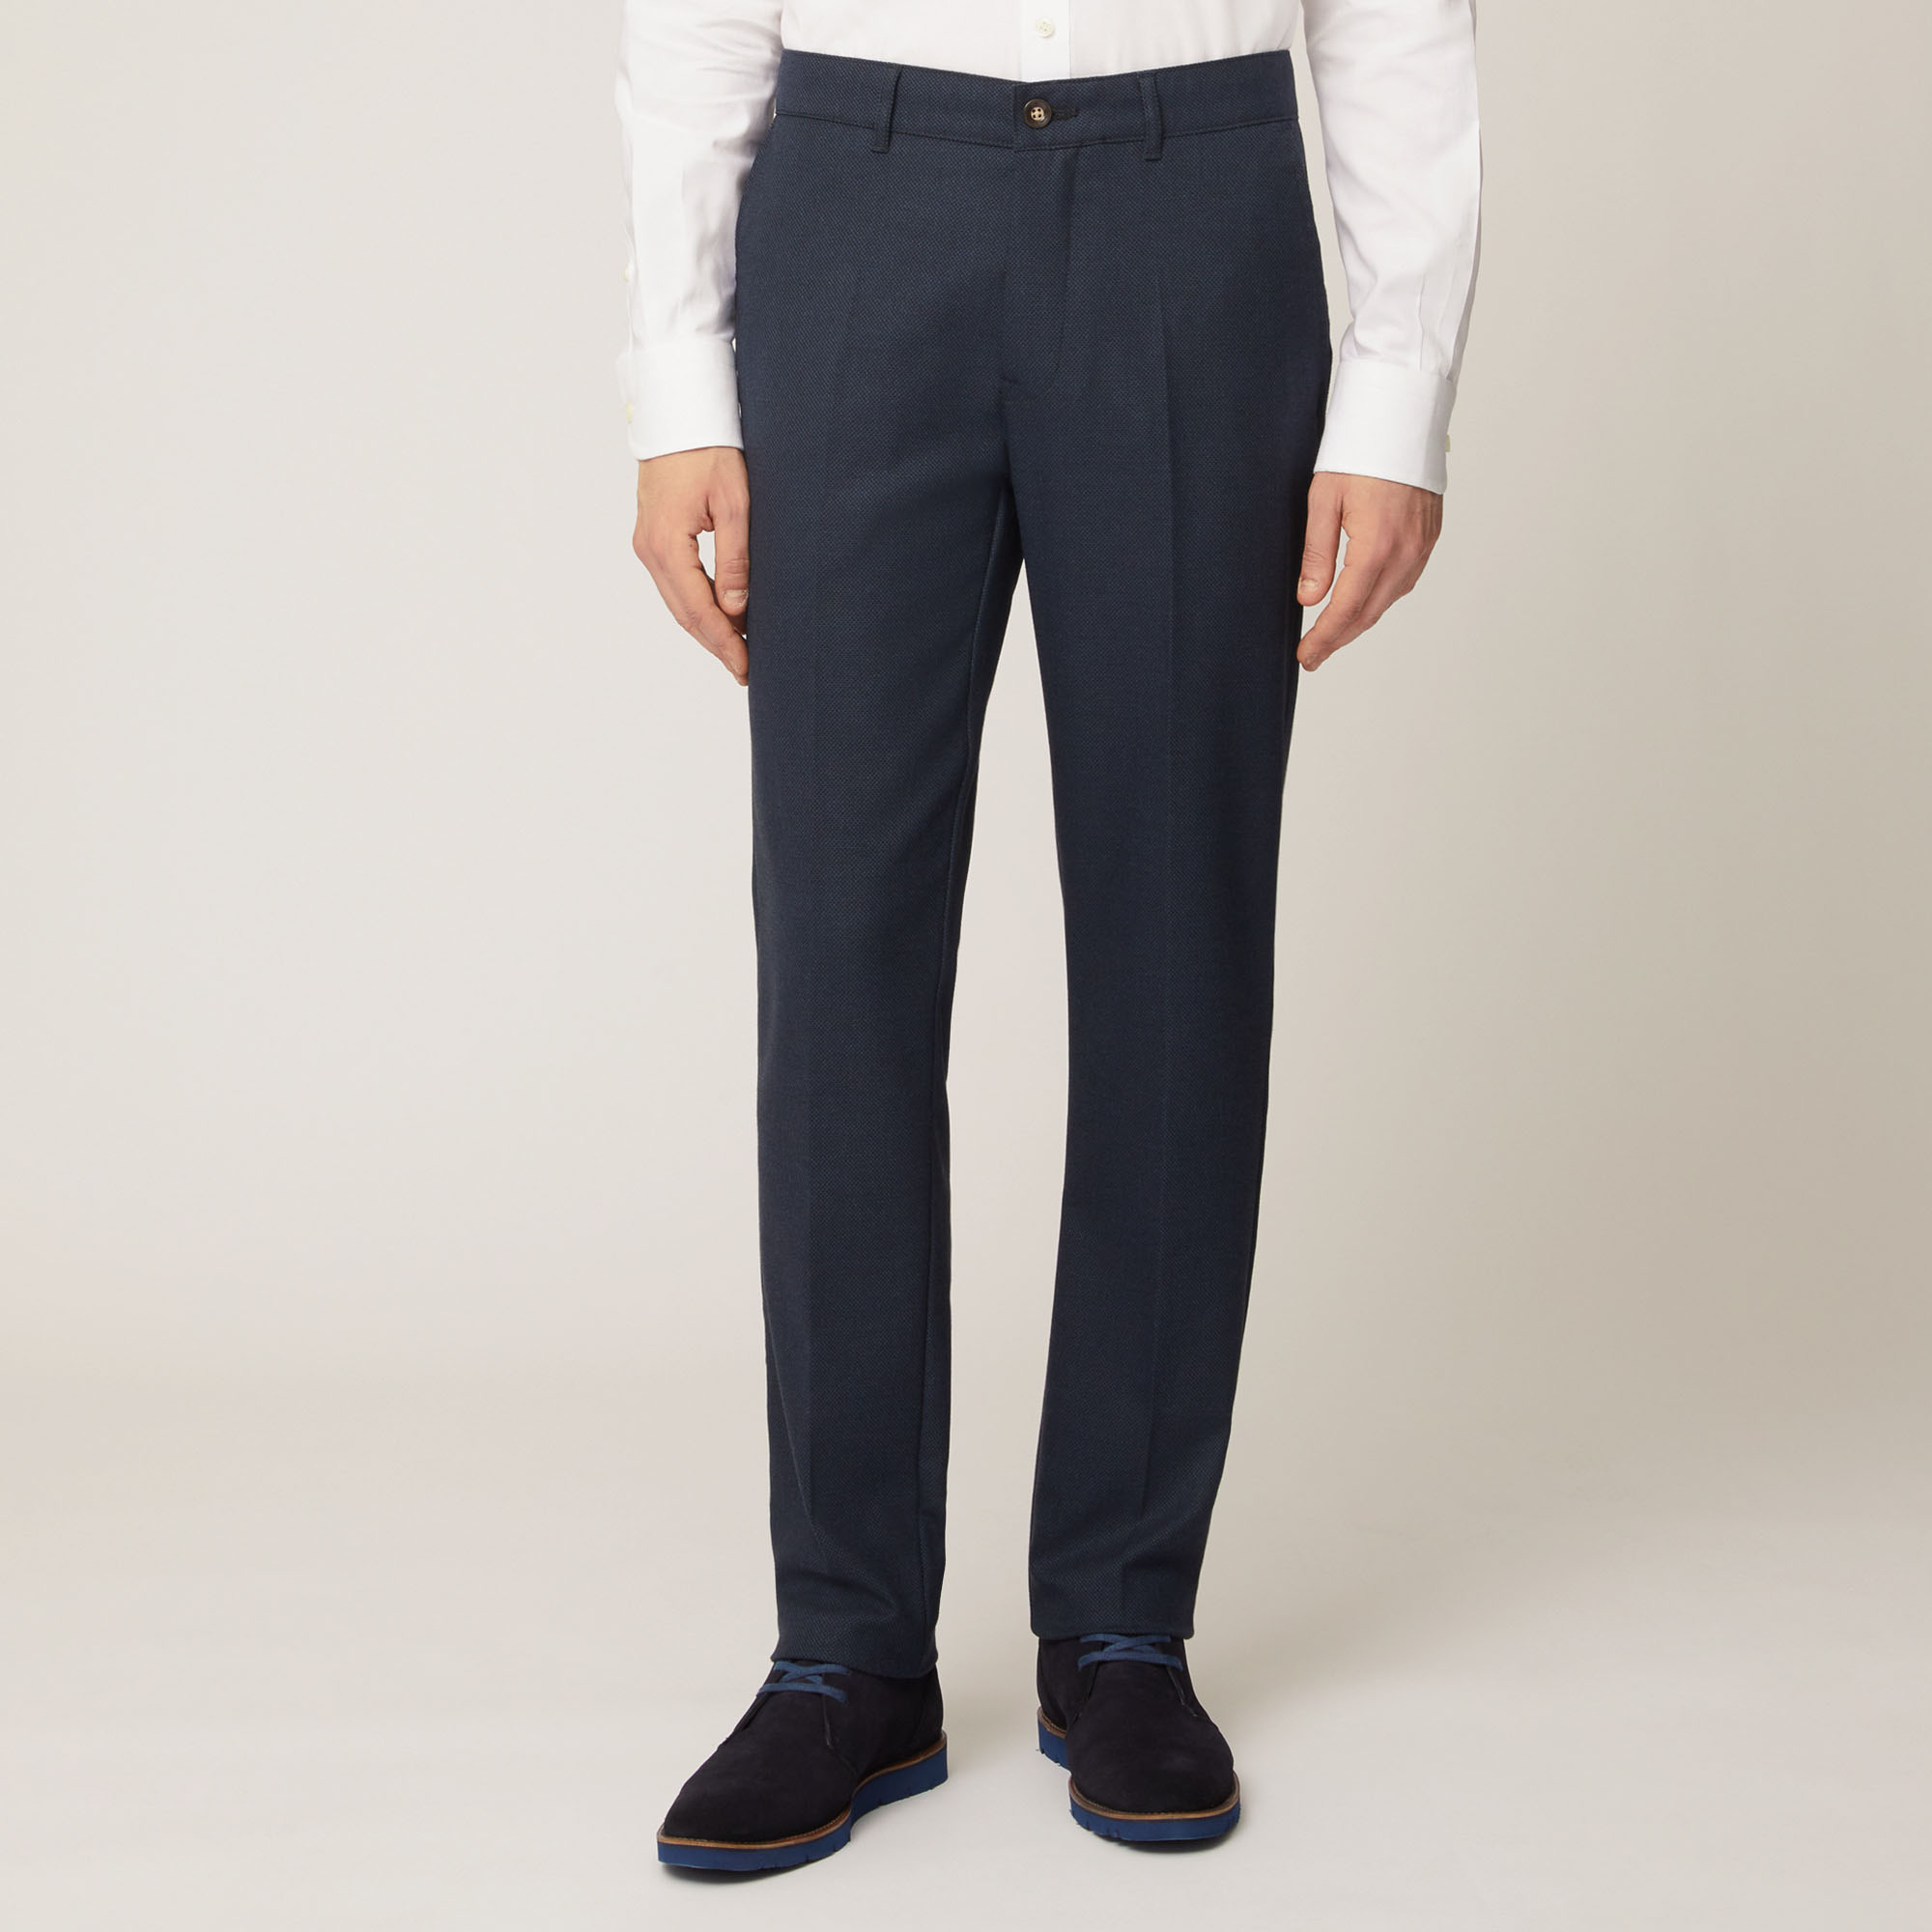 Pantalone Chino In Cotone Stampato, Light Blue, large